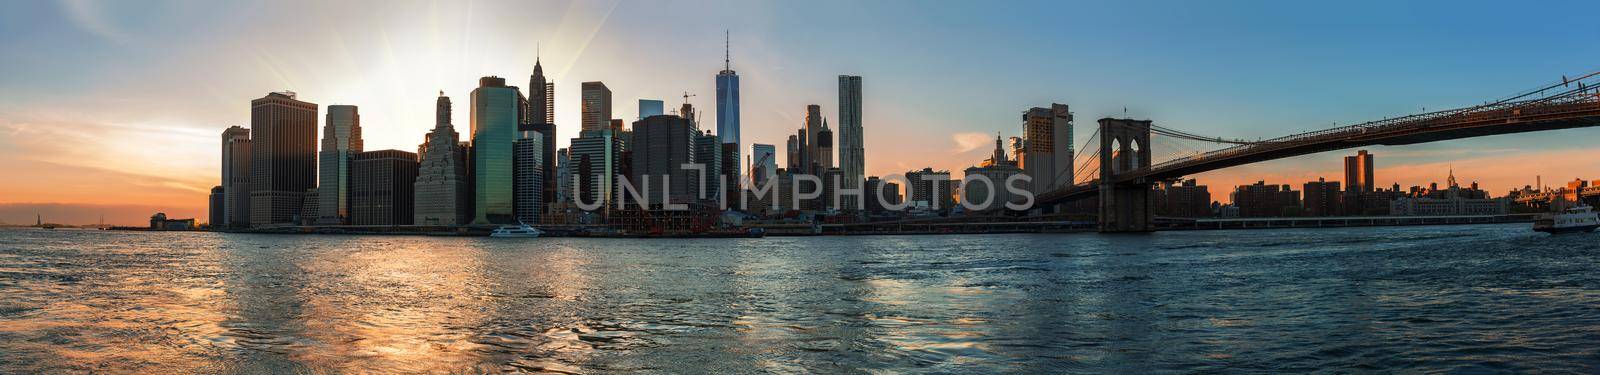 NEW YORK, USA - May 01, 2016: Panorama of Manhattan Skyline and Brooklyn Bridge during sunset seen from Brooklyn Bridge Park